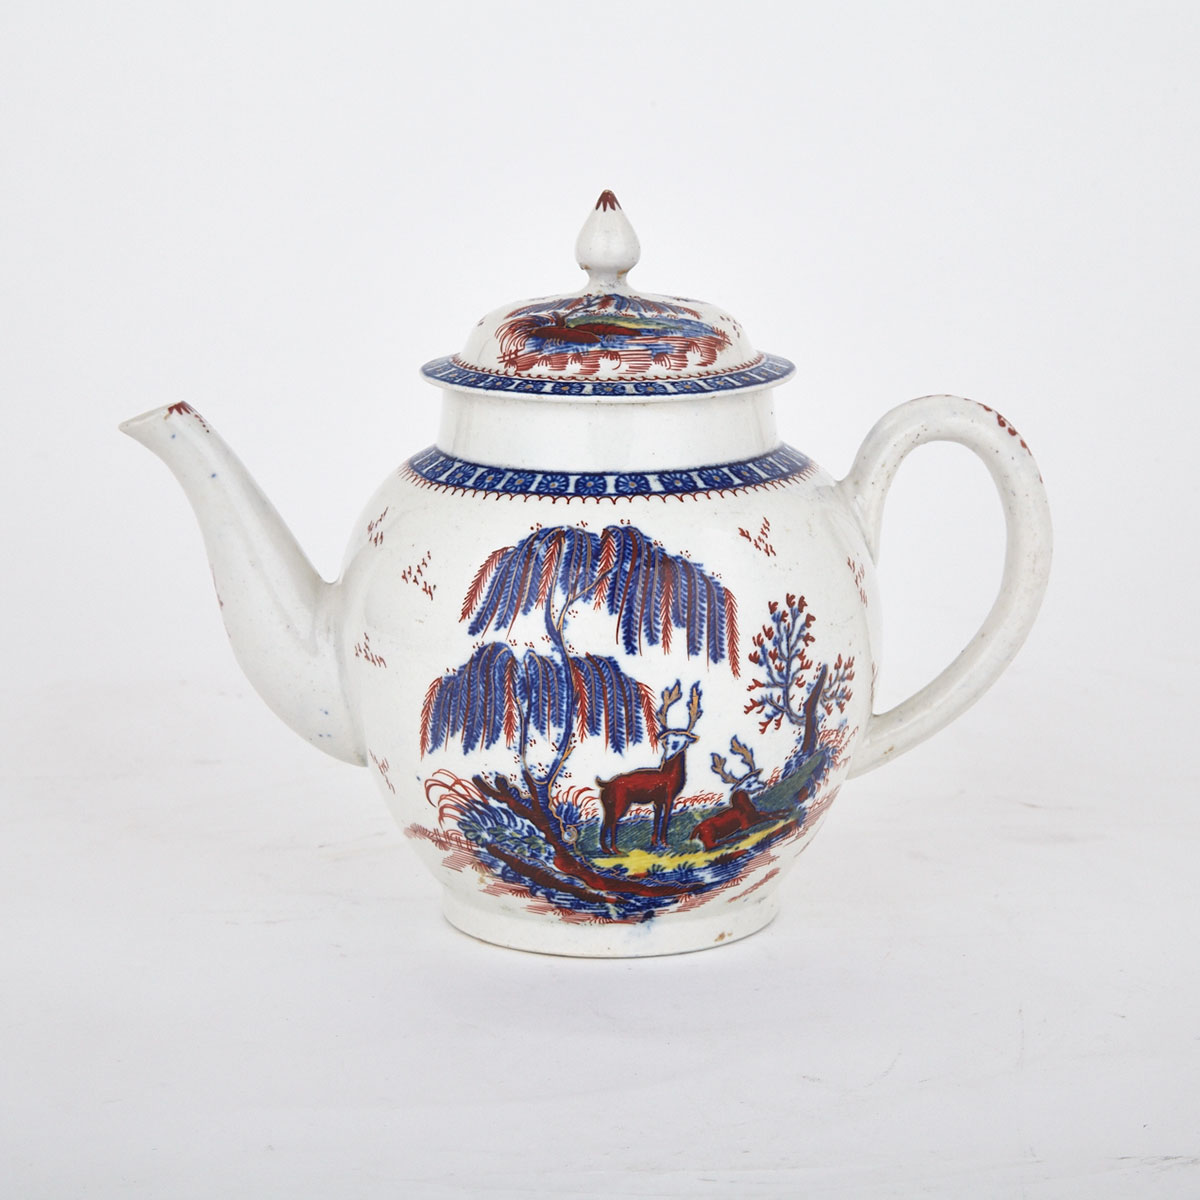 Pennington’s Liverpool Teapot, c.1785